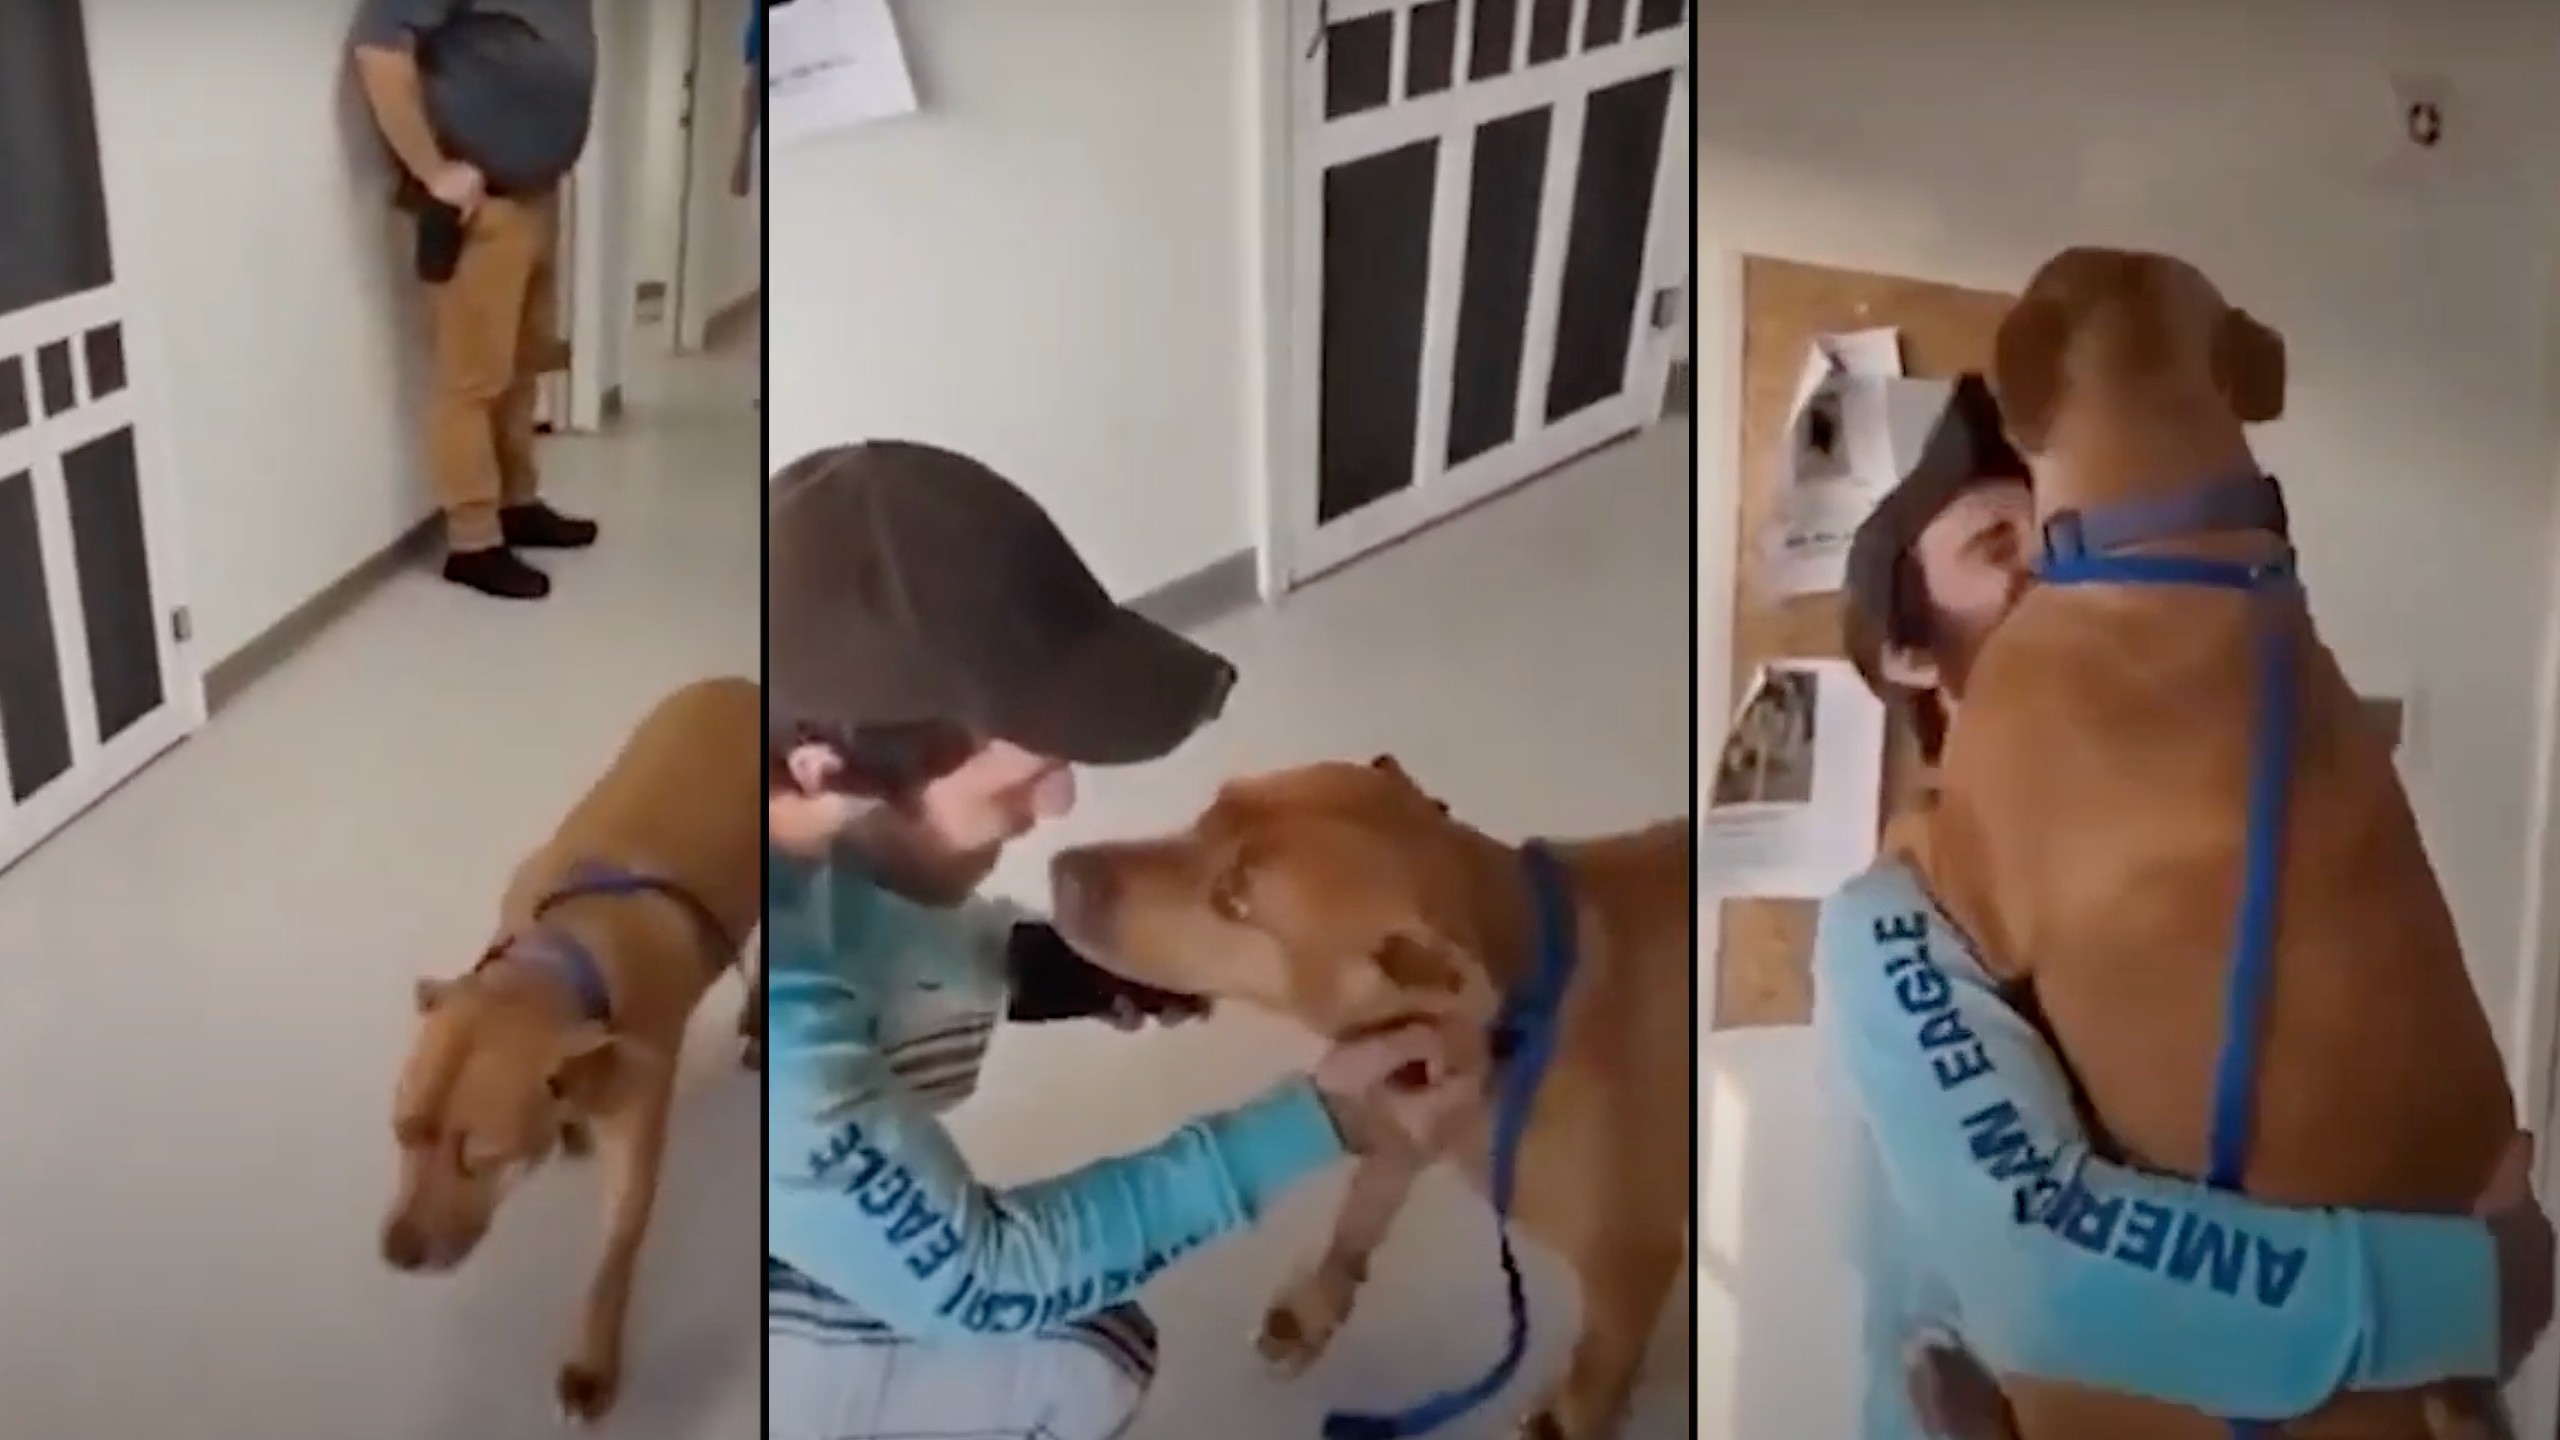 Man reunites with stolen dog in heartwarming video